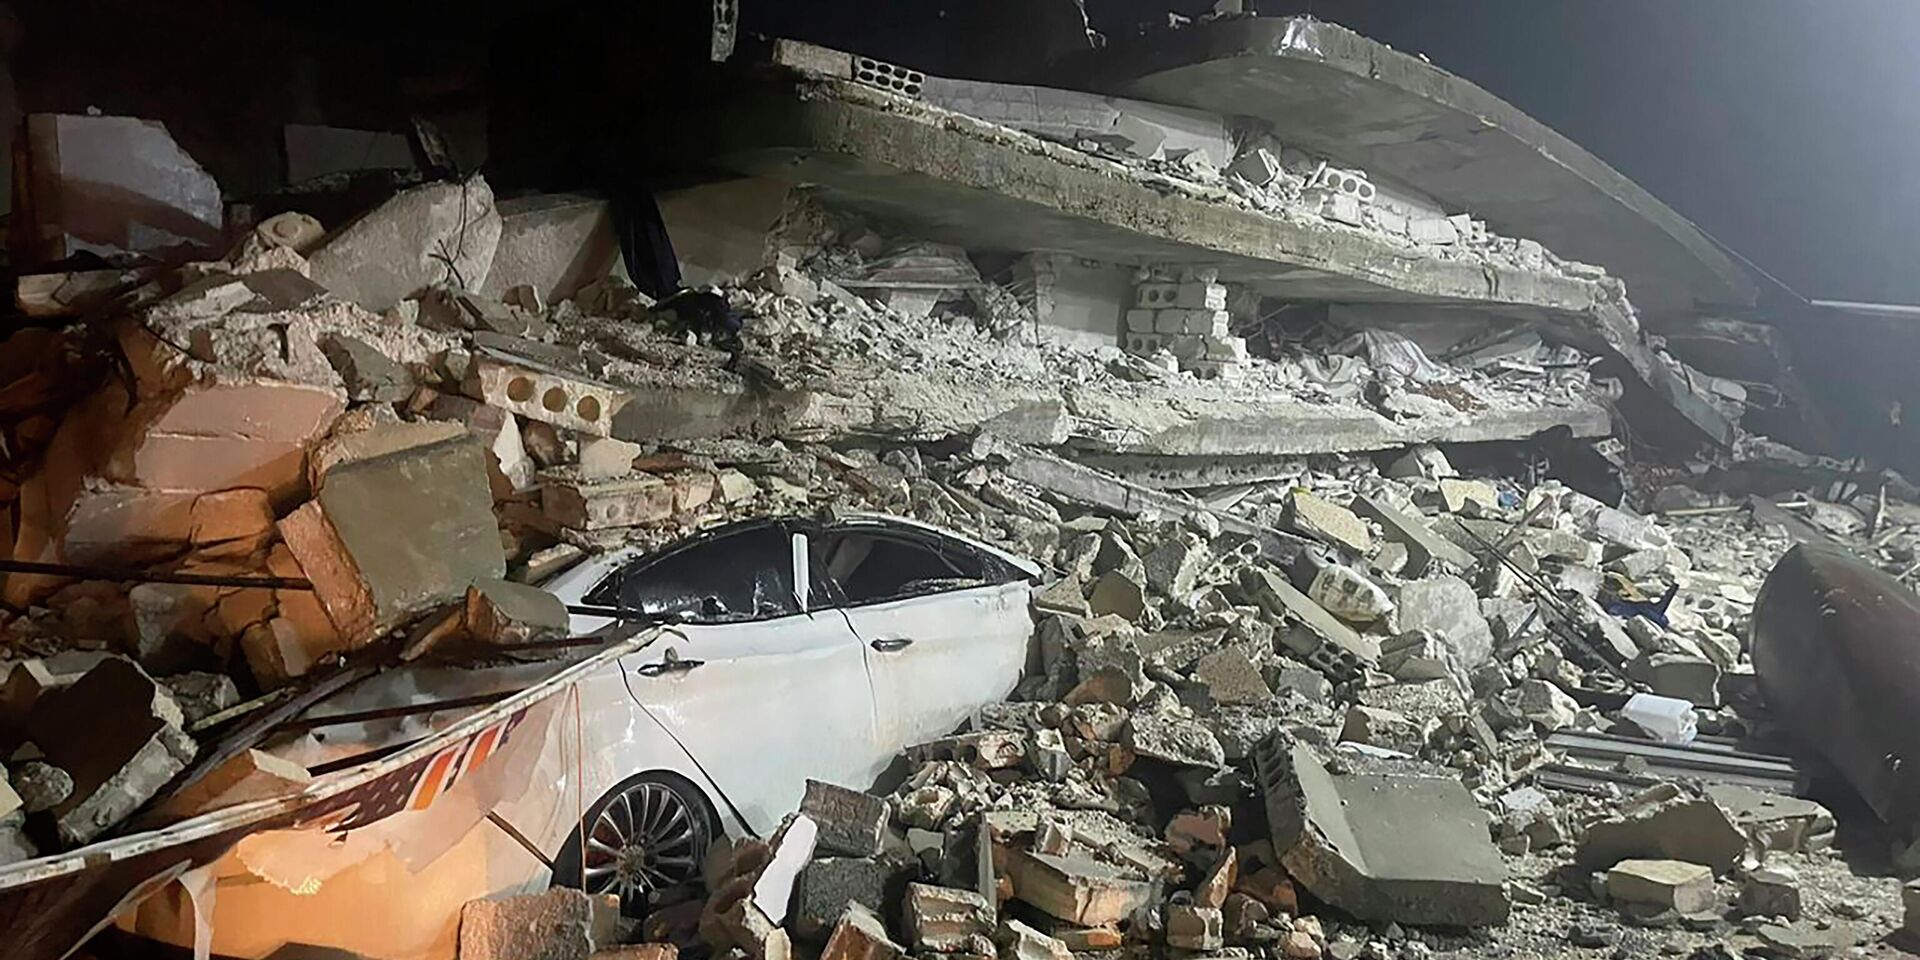 Последствия землетрясения в городе Азмарин, провинция Идлиб, Сирия. 6 февраля 2023 года - ИноСМИ, 1920, 07.02.2023